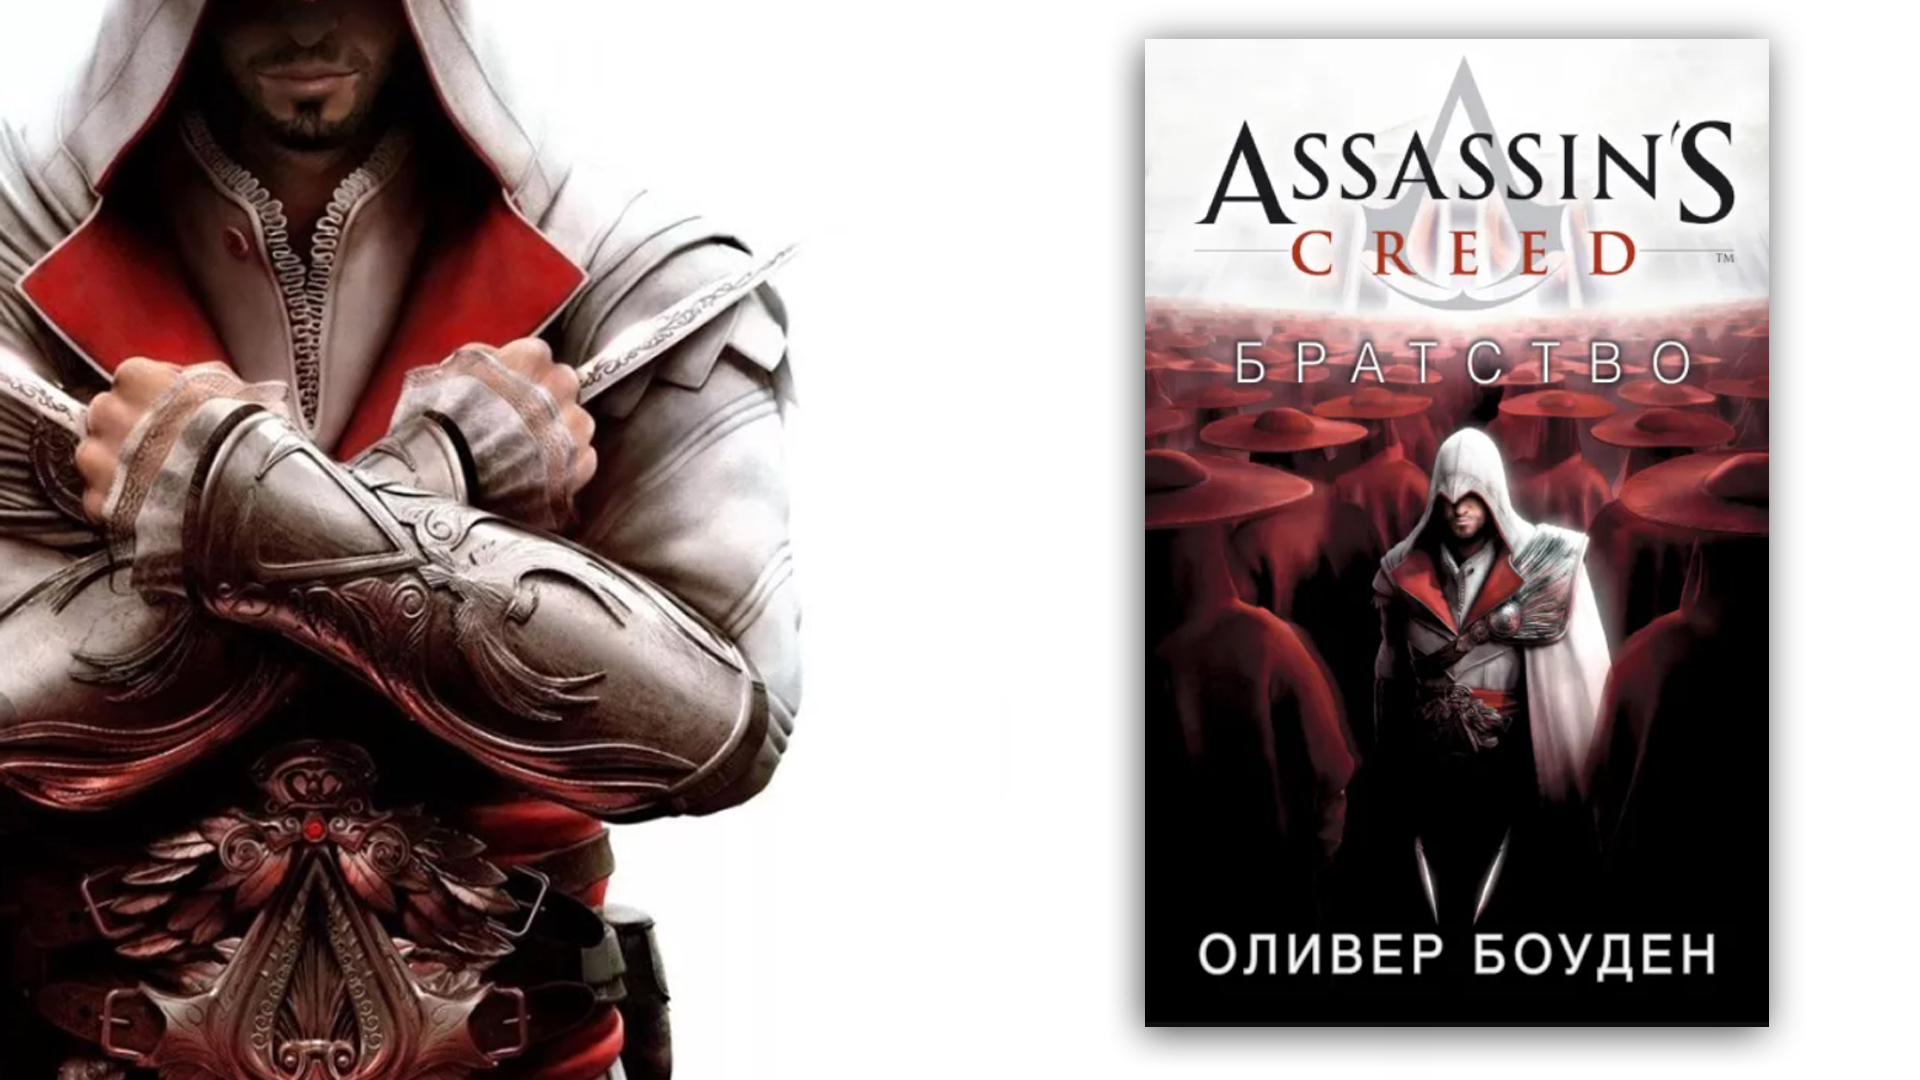 Обложка книги "Assassin's Creed Братство"